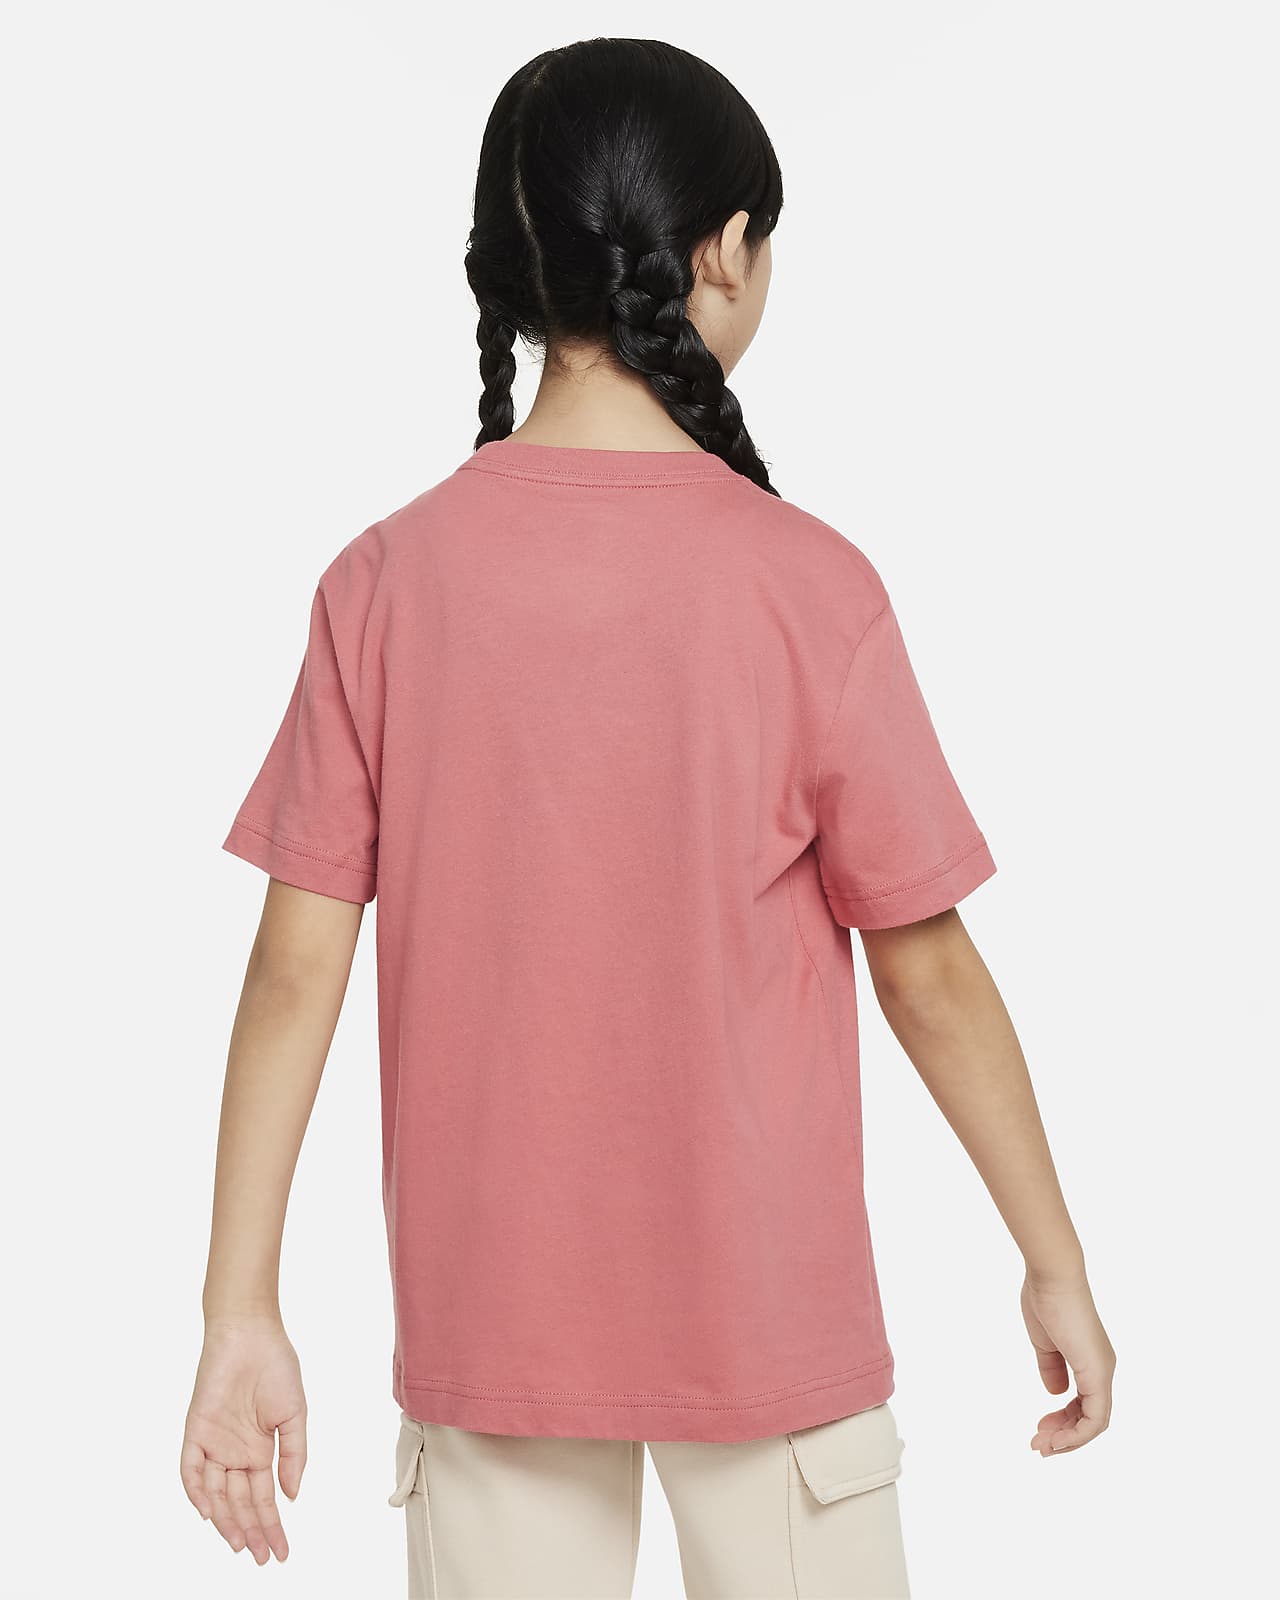 Women's Pink Tops & T-Shirts. Nike ZA